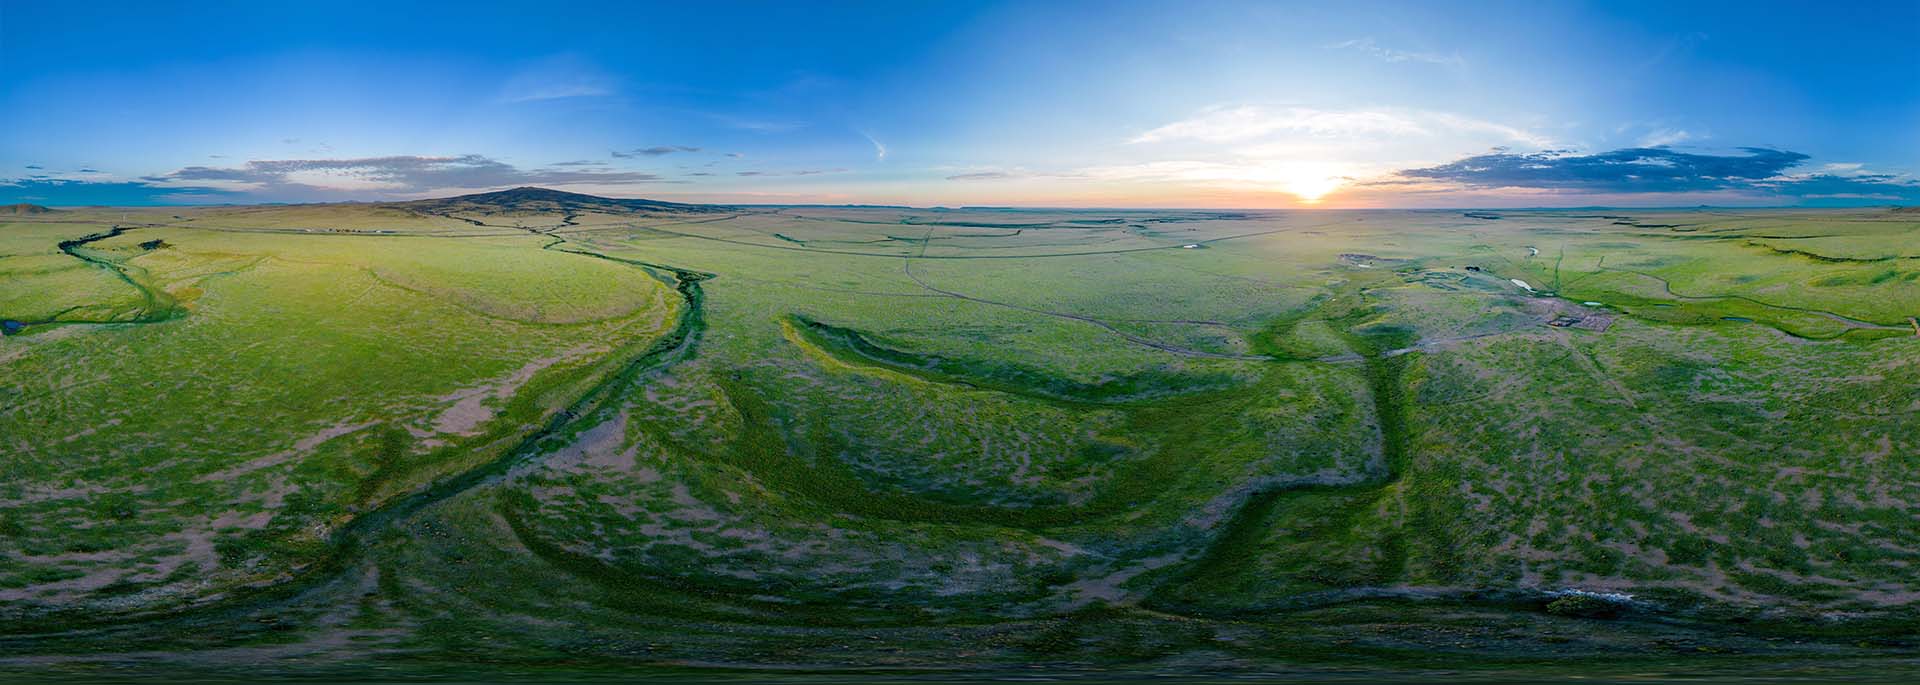 Aerial 360 equirectangular photo nature landscape Des Moines New Mexico sunrise